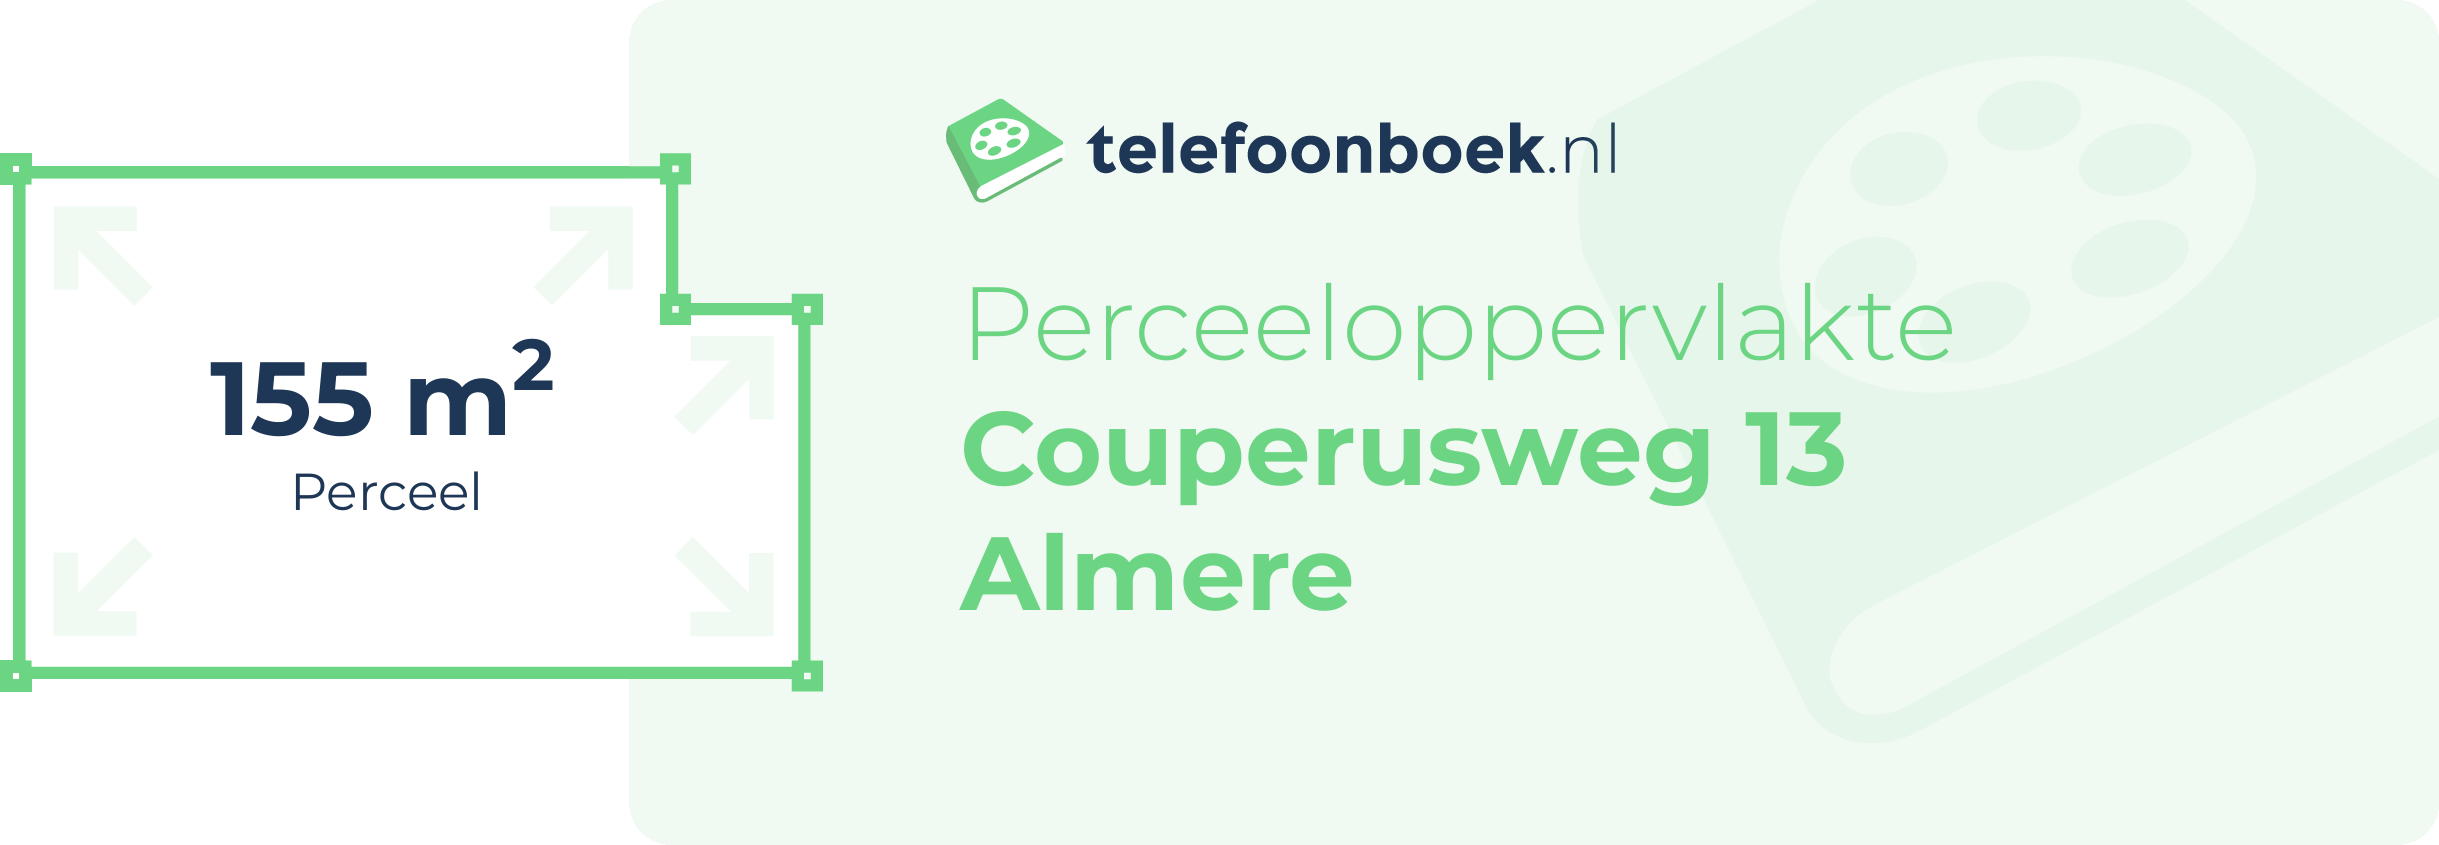 Perceeloppervlakte Couperusweg 13 Almere